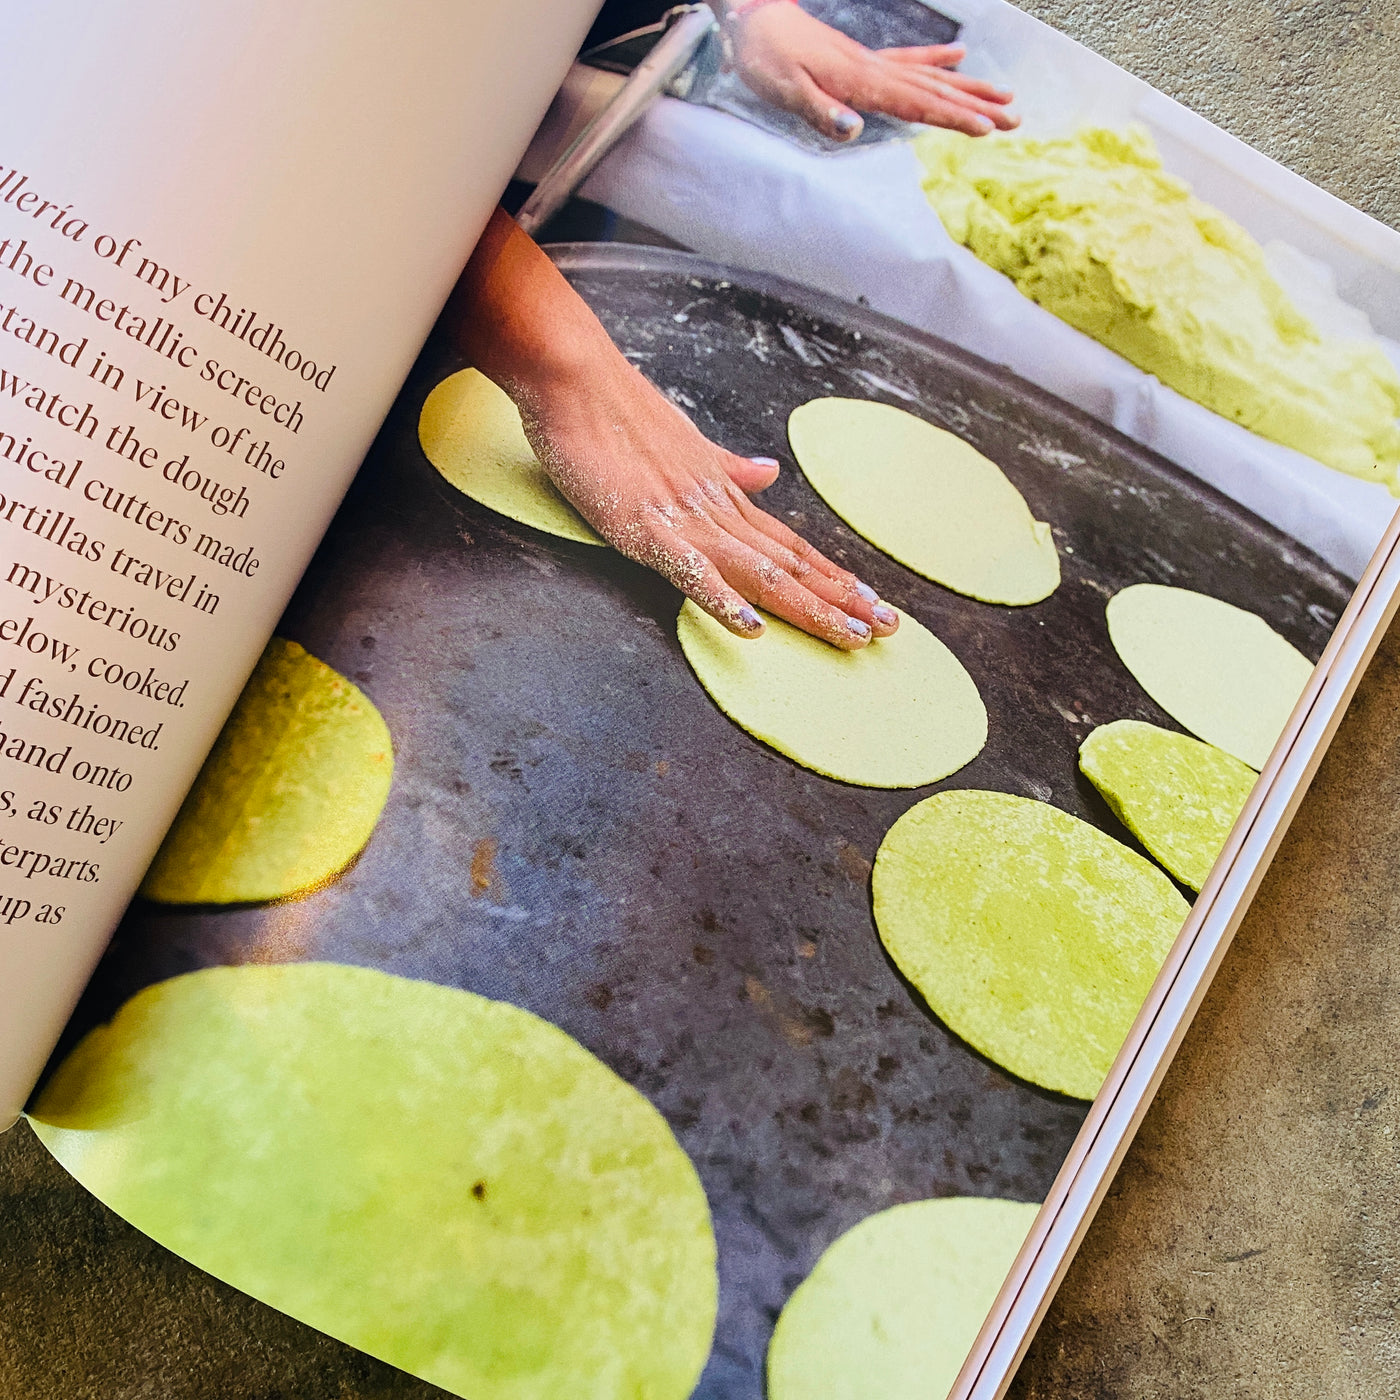 World Food - Mexico City Kitchen Cookbook interior page